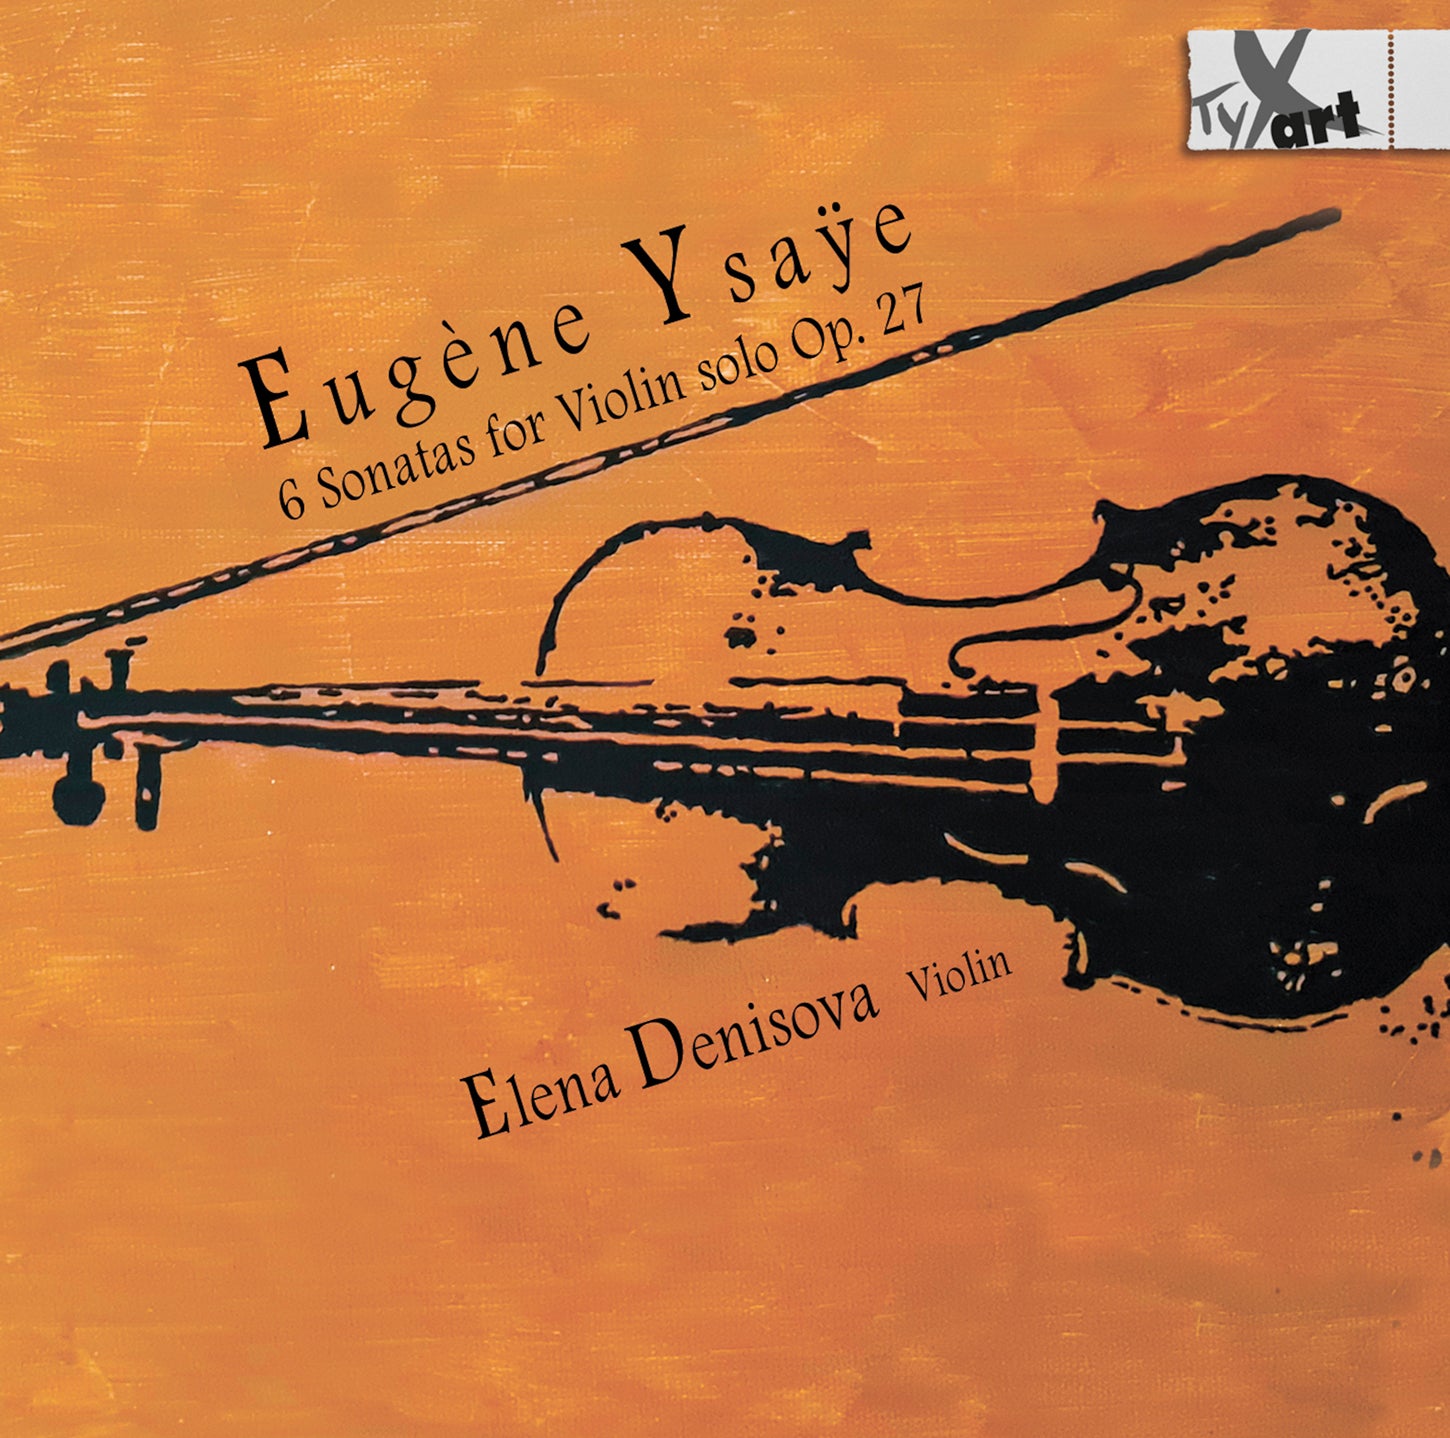 Ysaye: 6 Sonatas for Violin Solo, Op. 27 - Recordings in Six Historical Viennese Ambiences